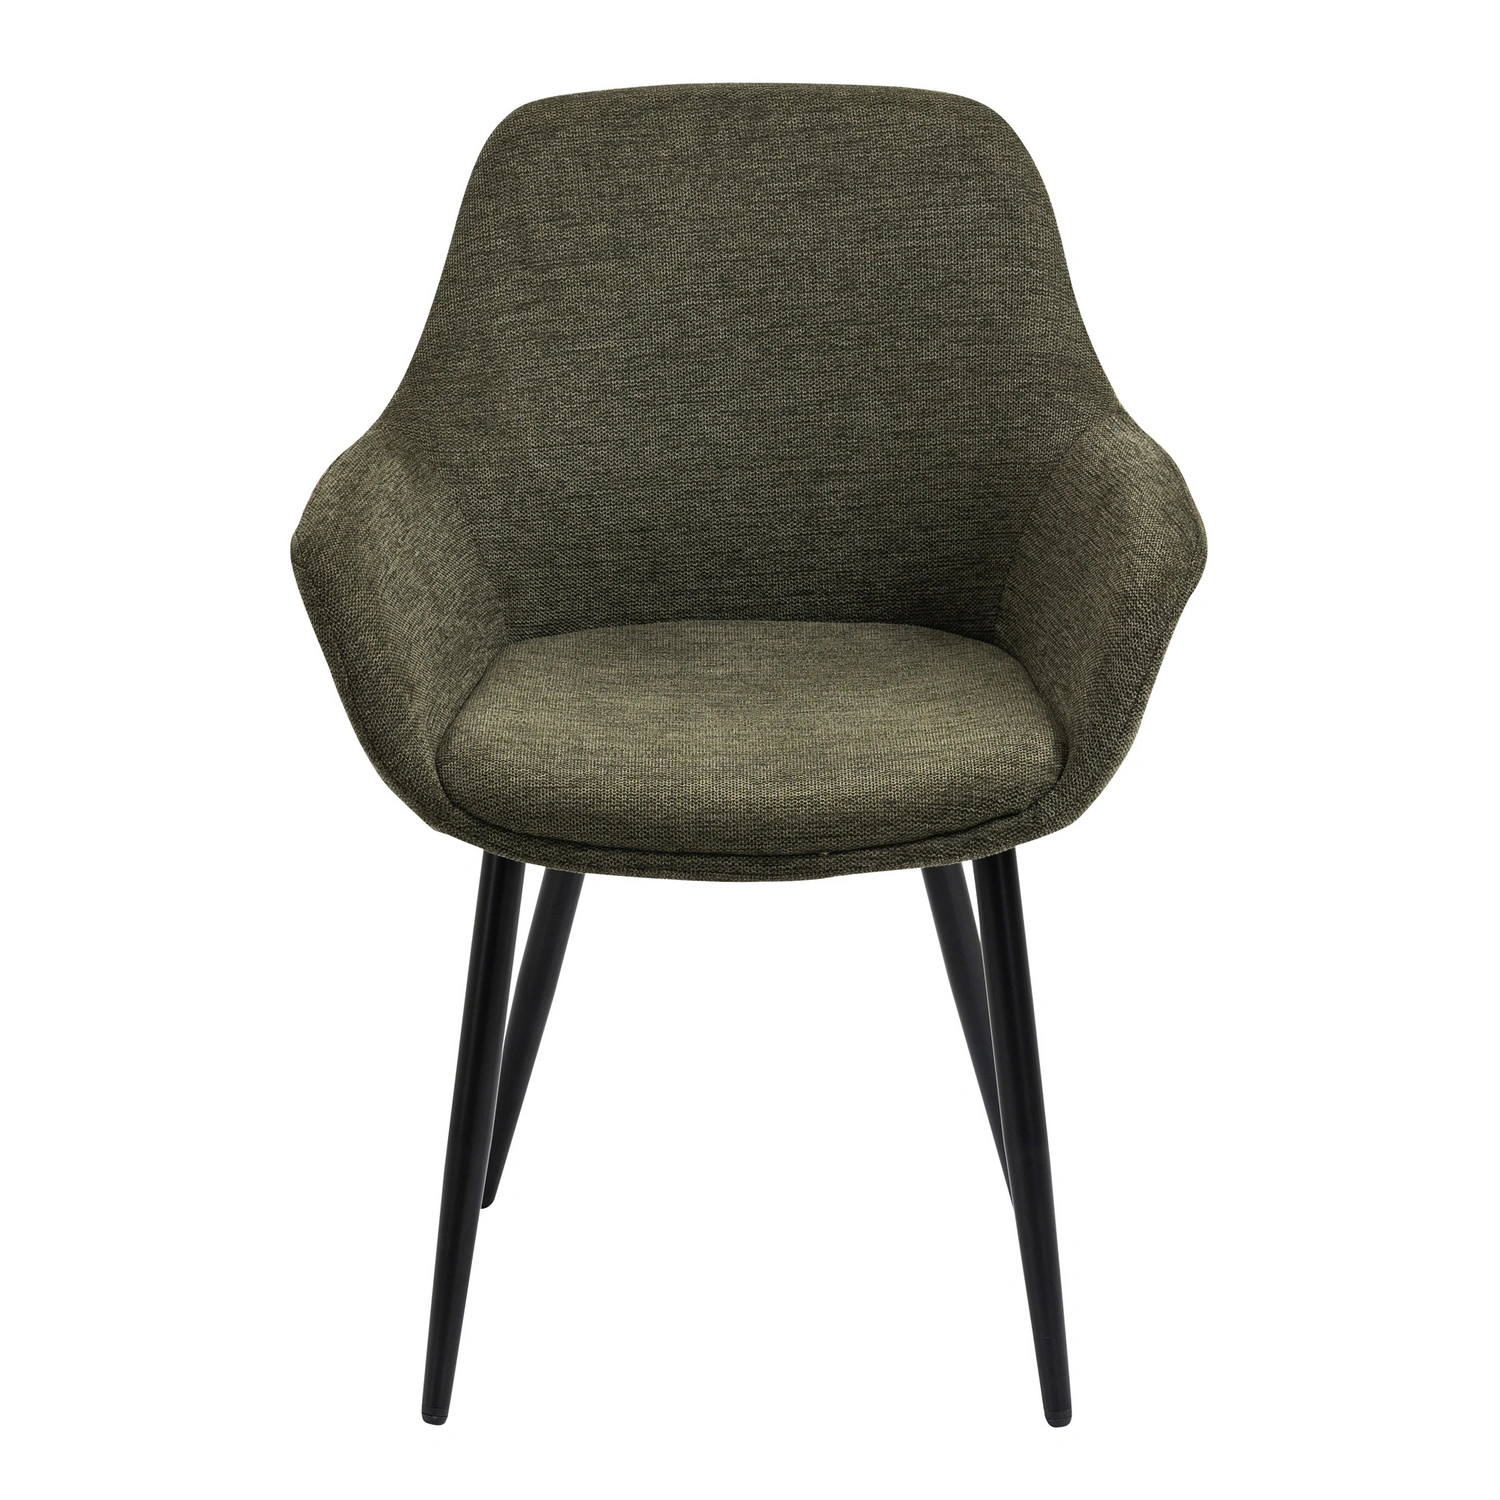 SalesFever Stuhl, Höhe: 86 cm, grün/schwarz, 2 stk